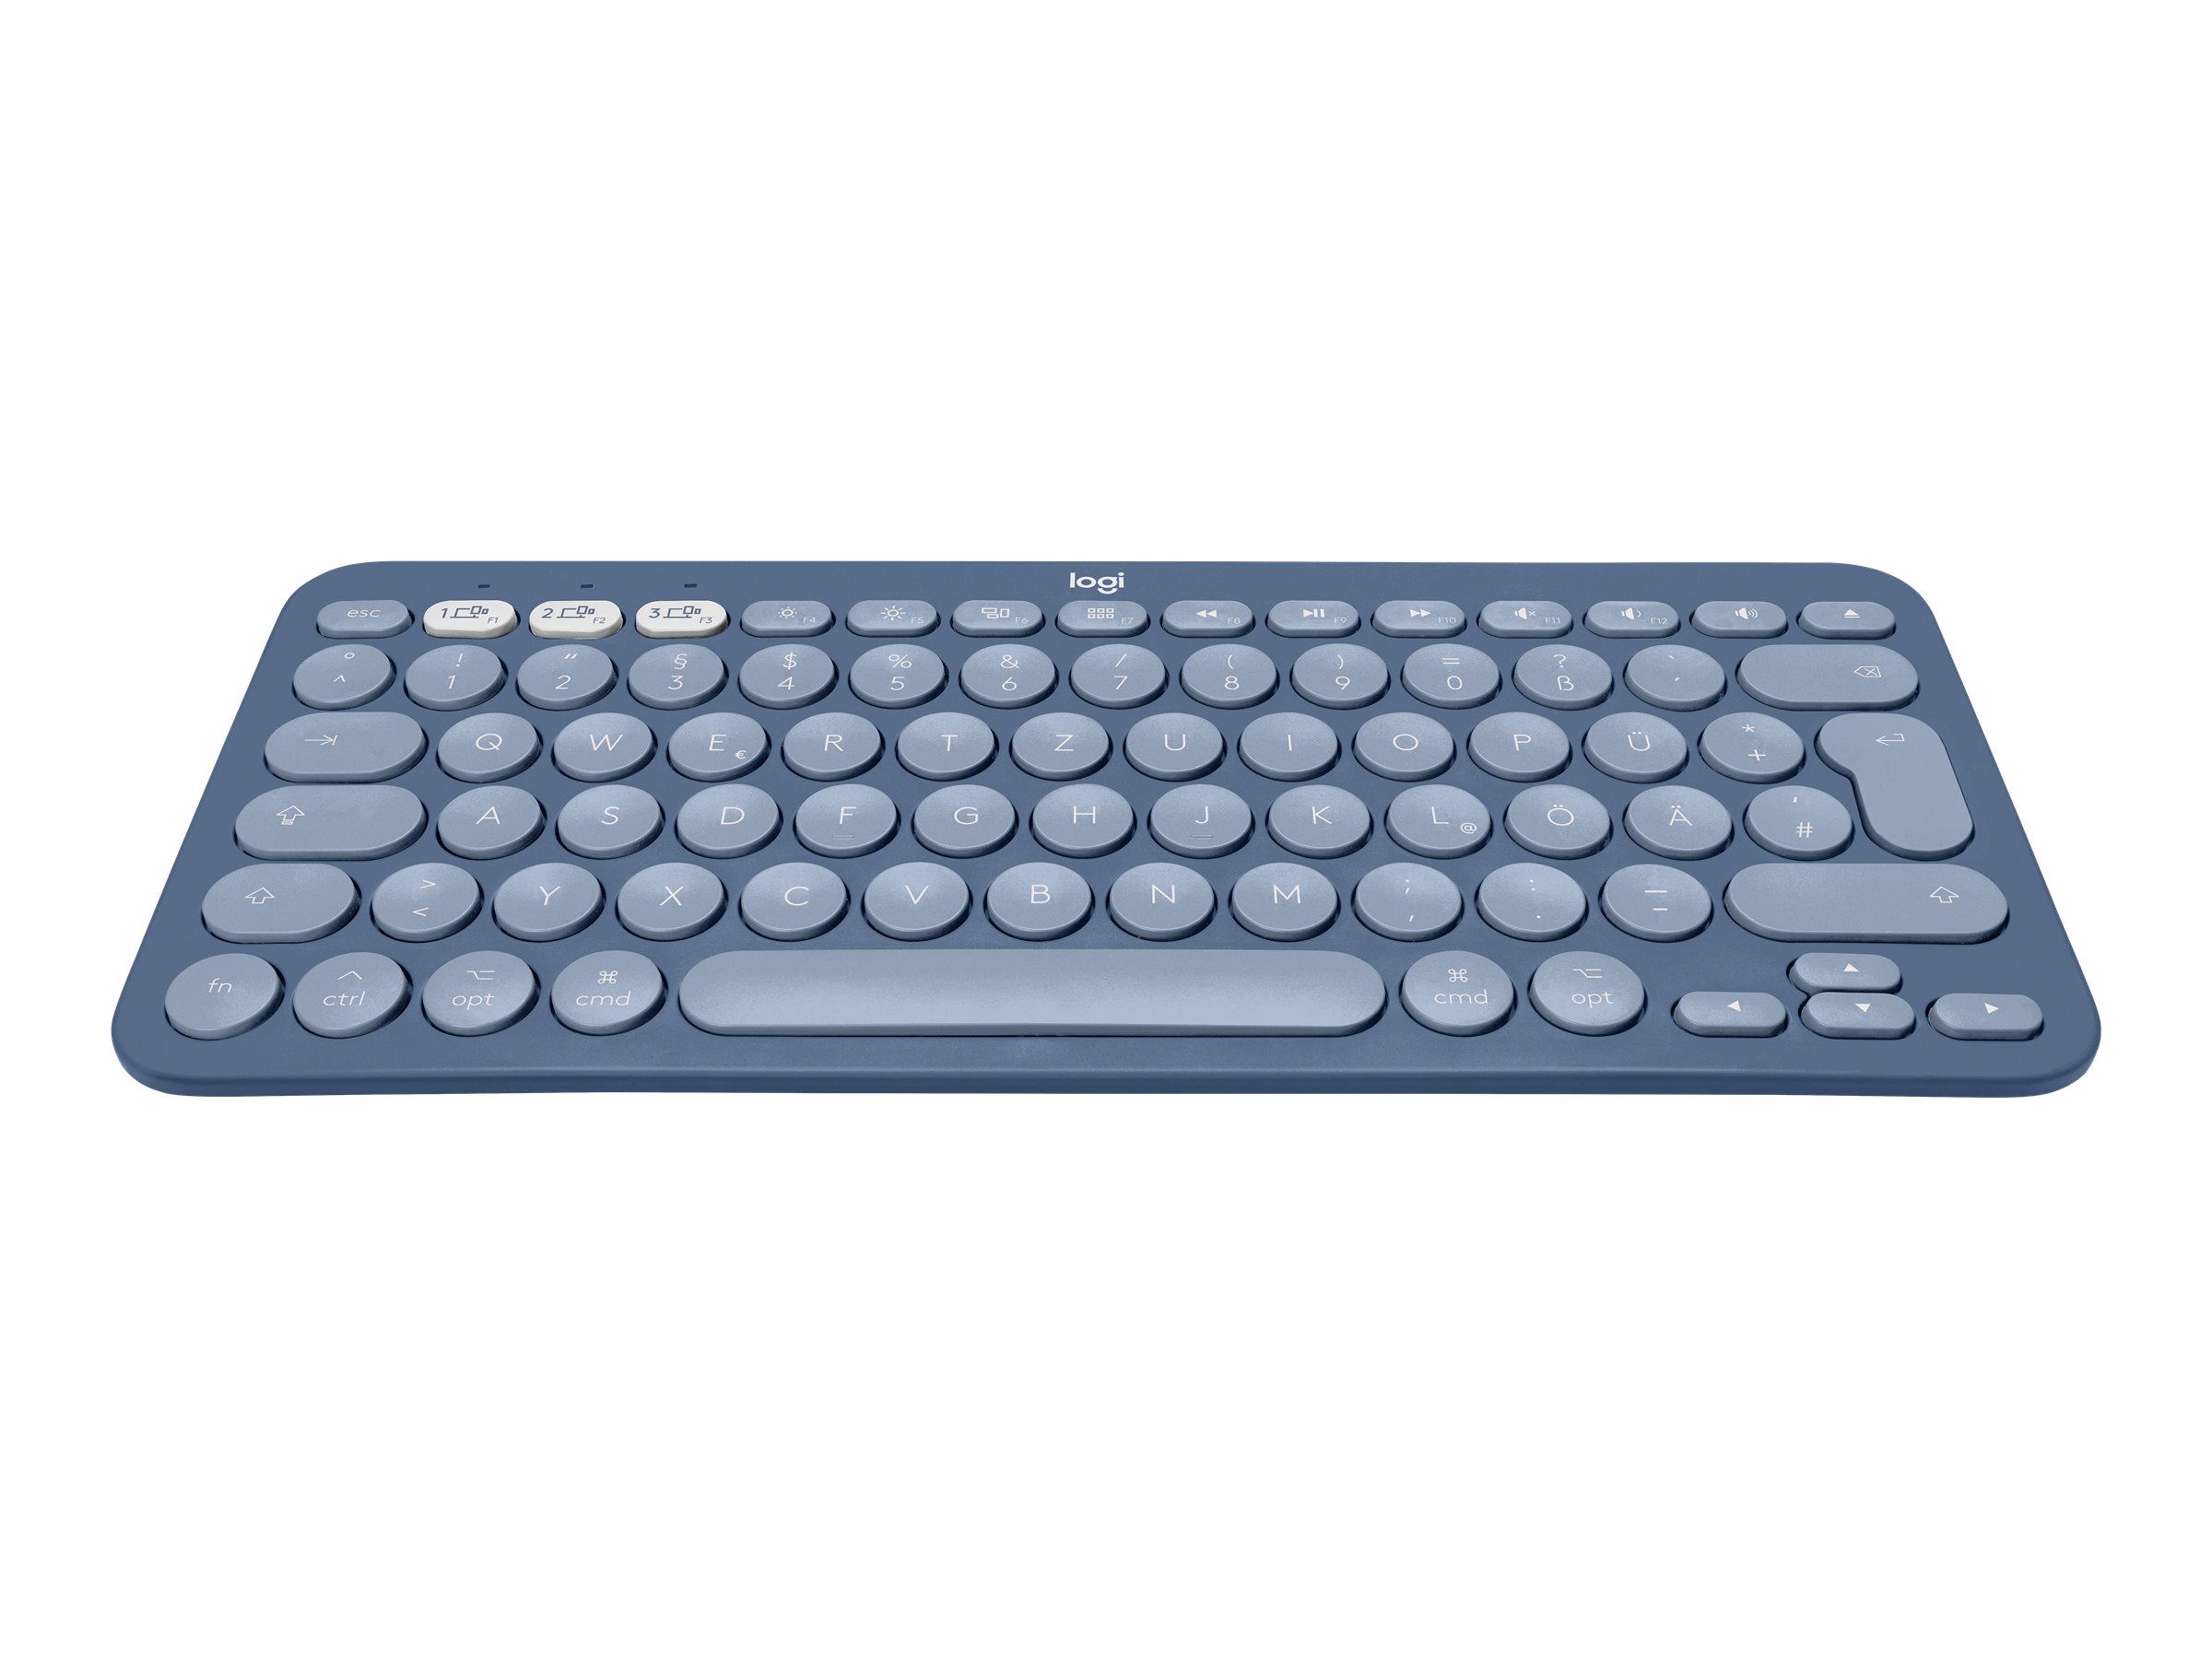 Logitech K380 Multi-Device Bluetooth Keyboard for Mac - Tastatur - kabellos - Bluetooth 3.0 - QWERTZ - Deutsch